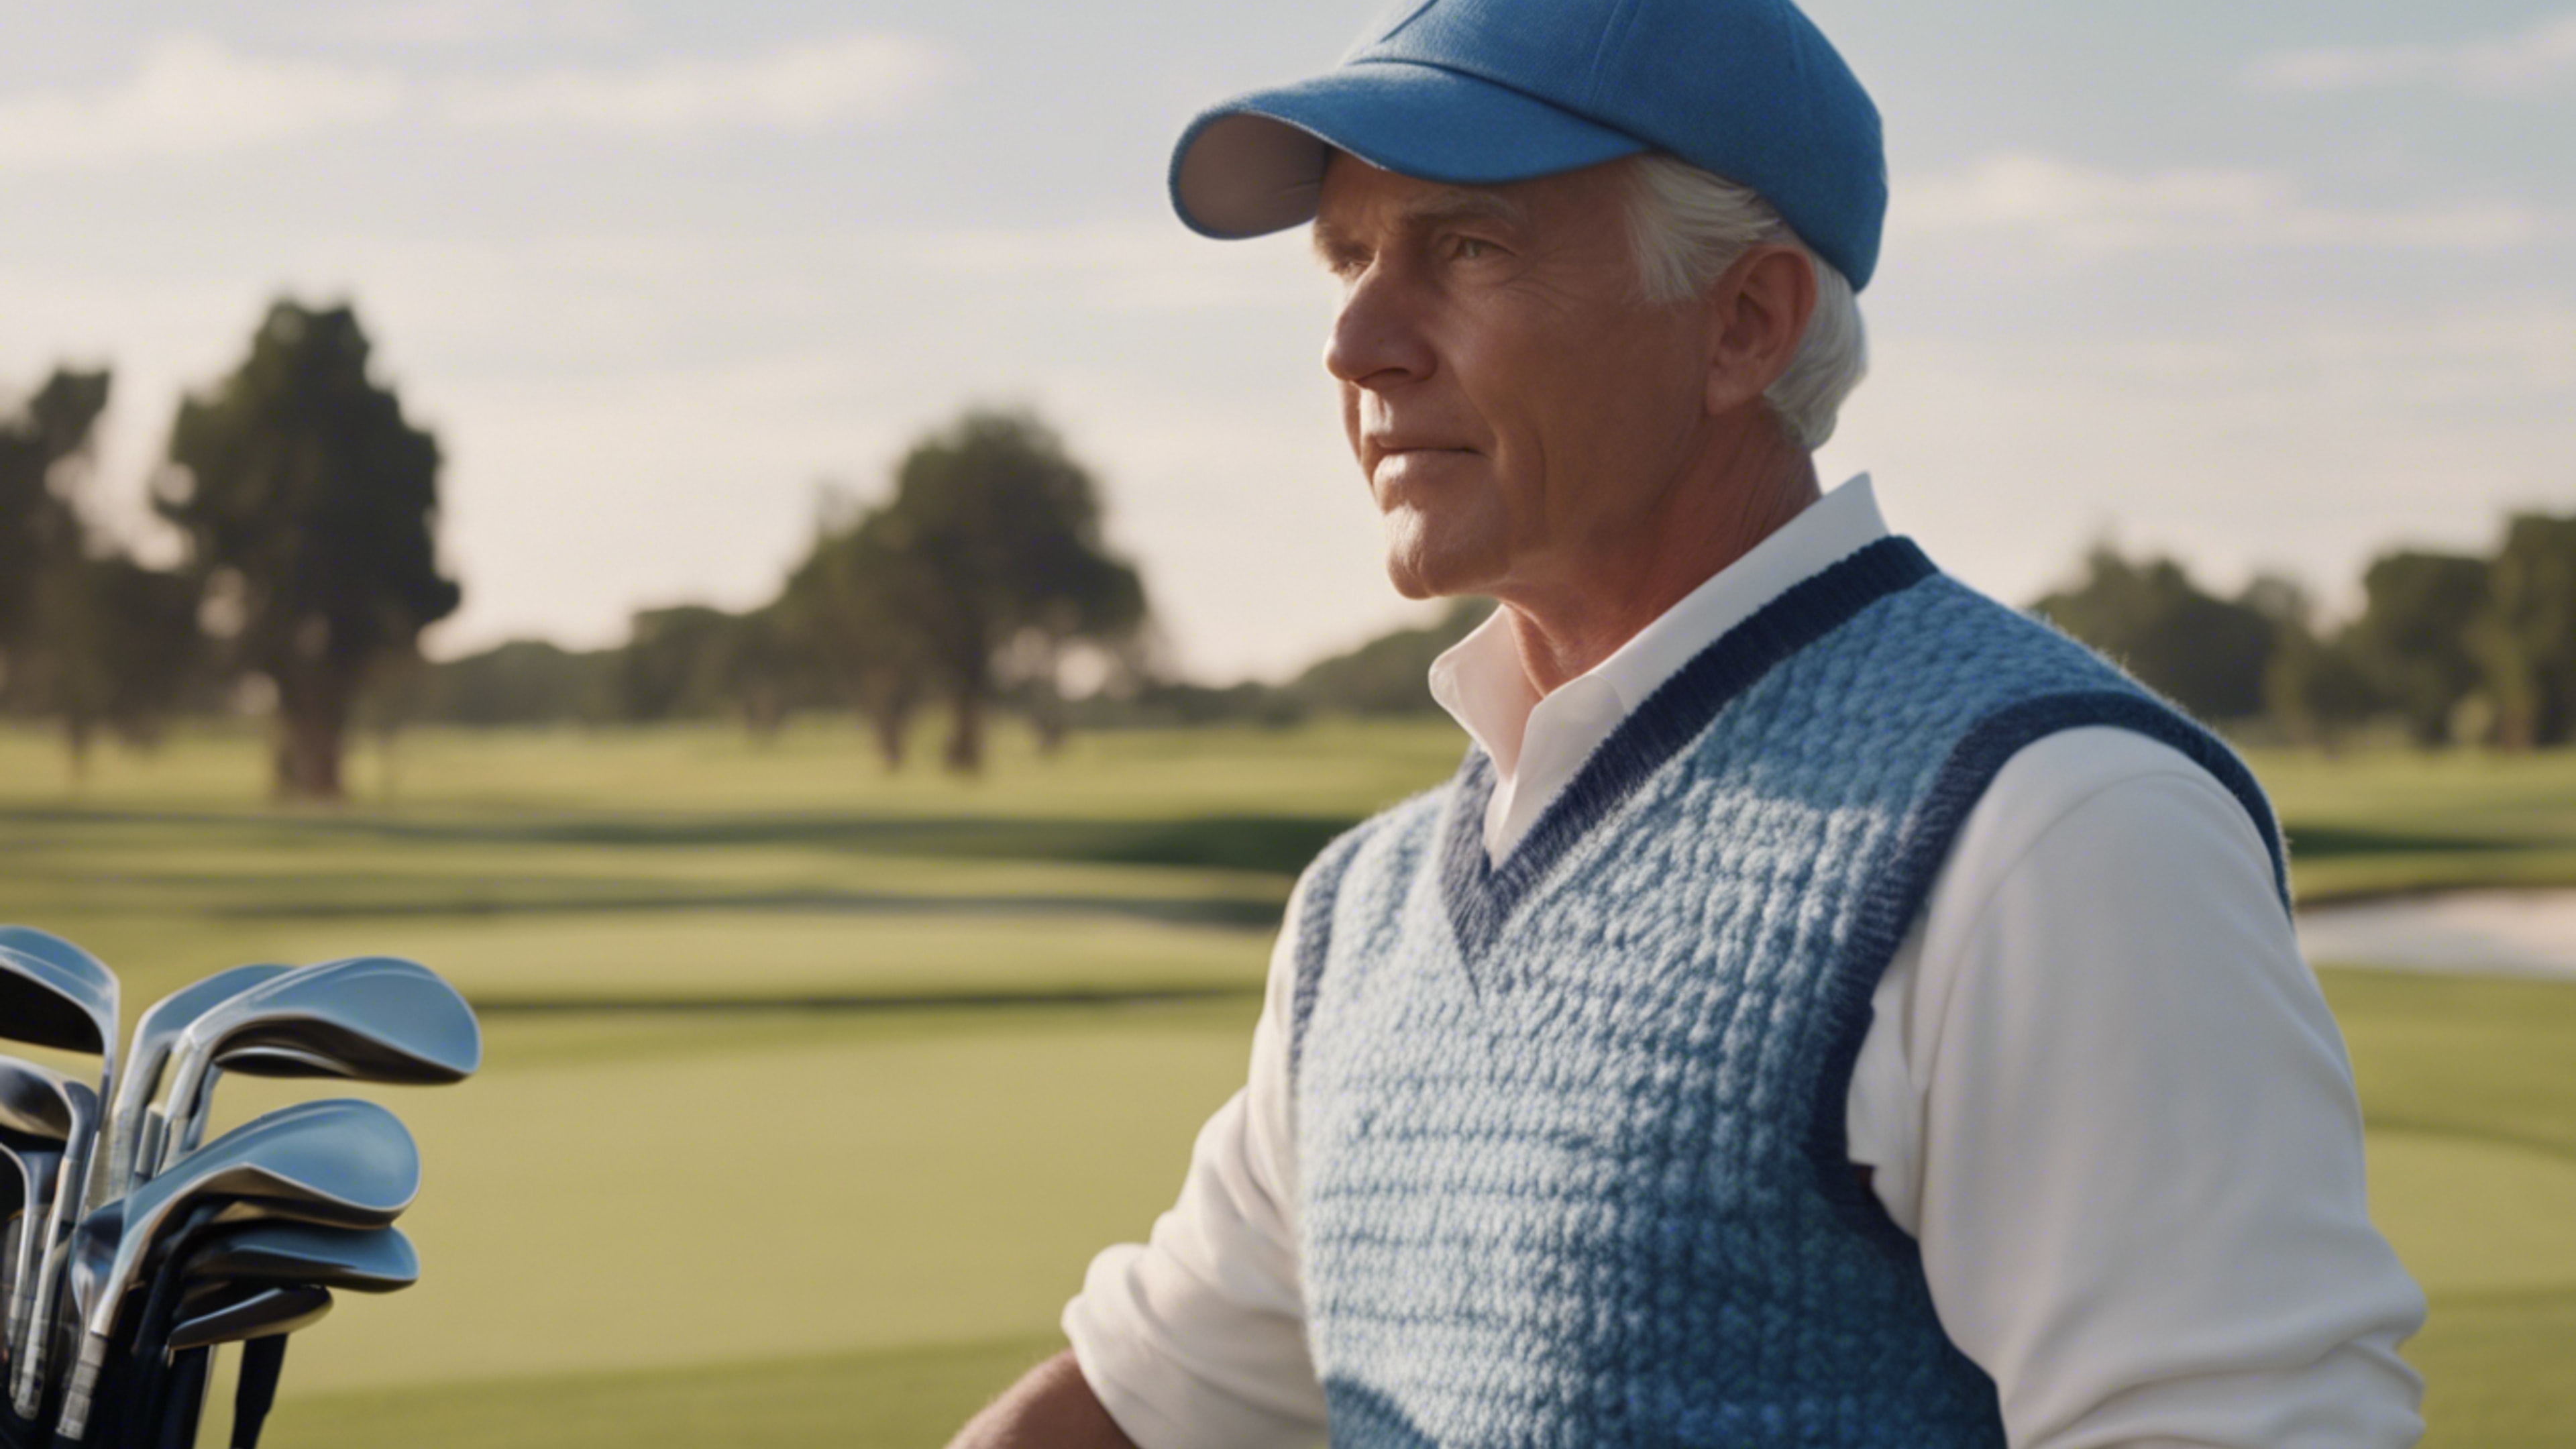 A preppy gentleman playing golf, wearing a crisp blue sweater vest, white trousers, and a blue plaid golf cap. Papel de parede[e529d0abba9b41109f82]